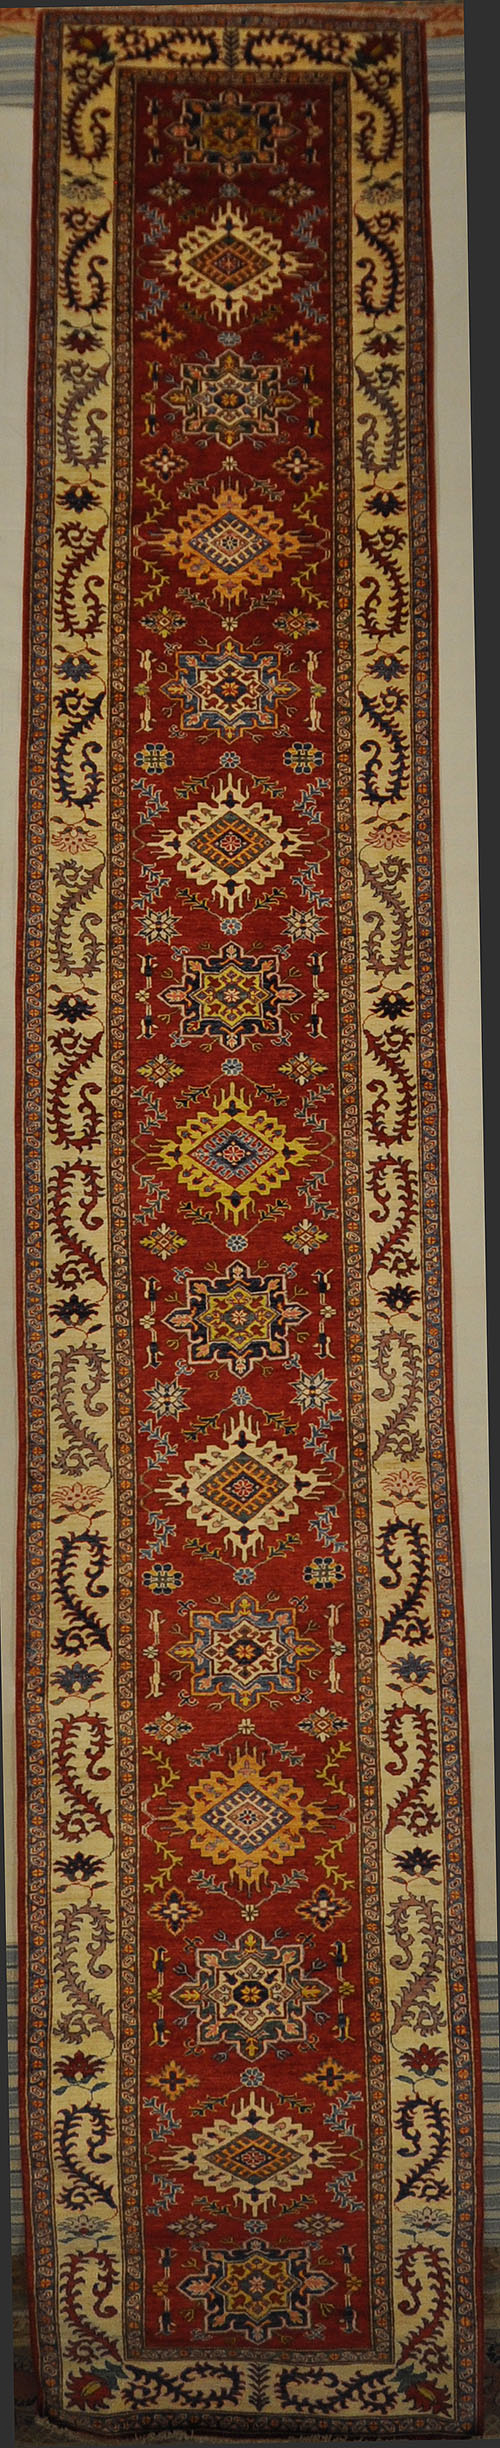 Turkoman Caucasian Runner santa barbara desing center rugs and more oriental carpet 30998-